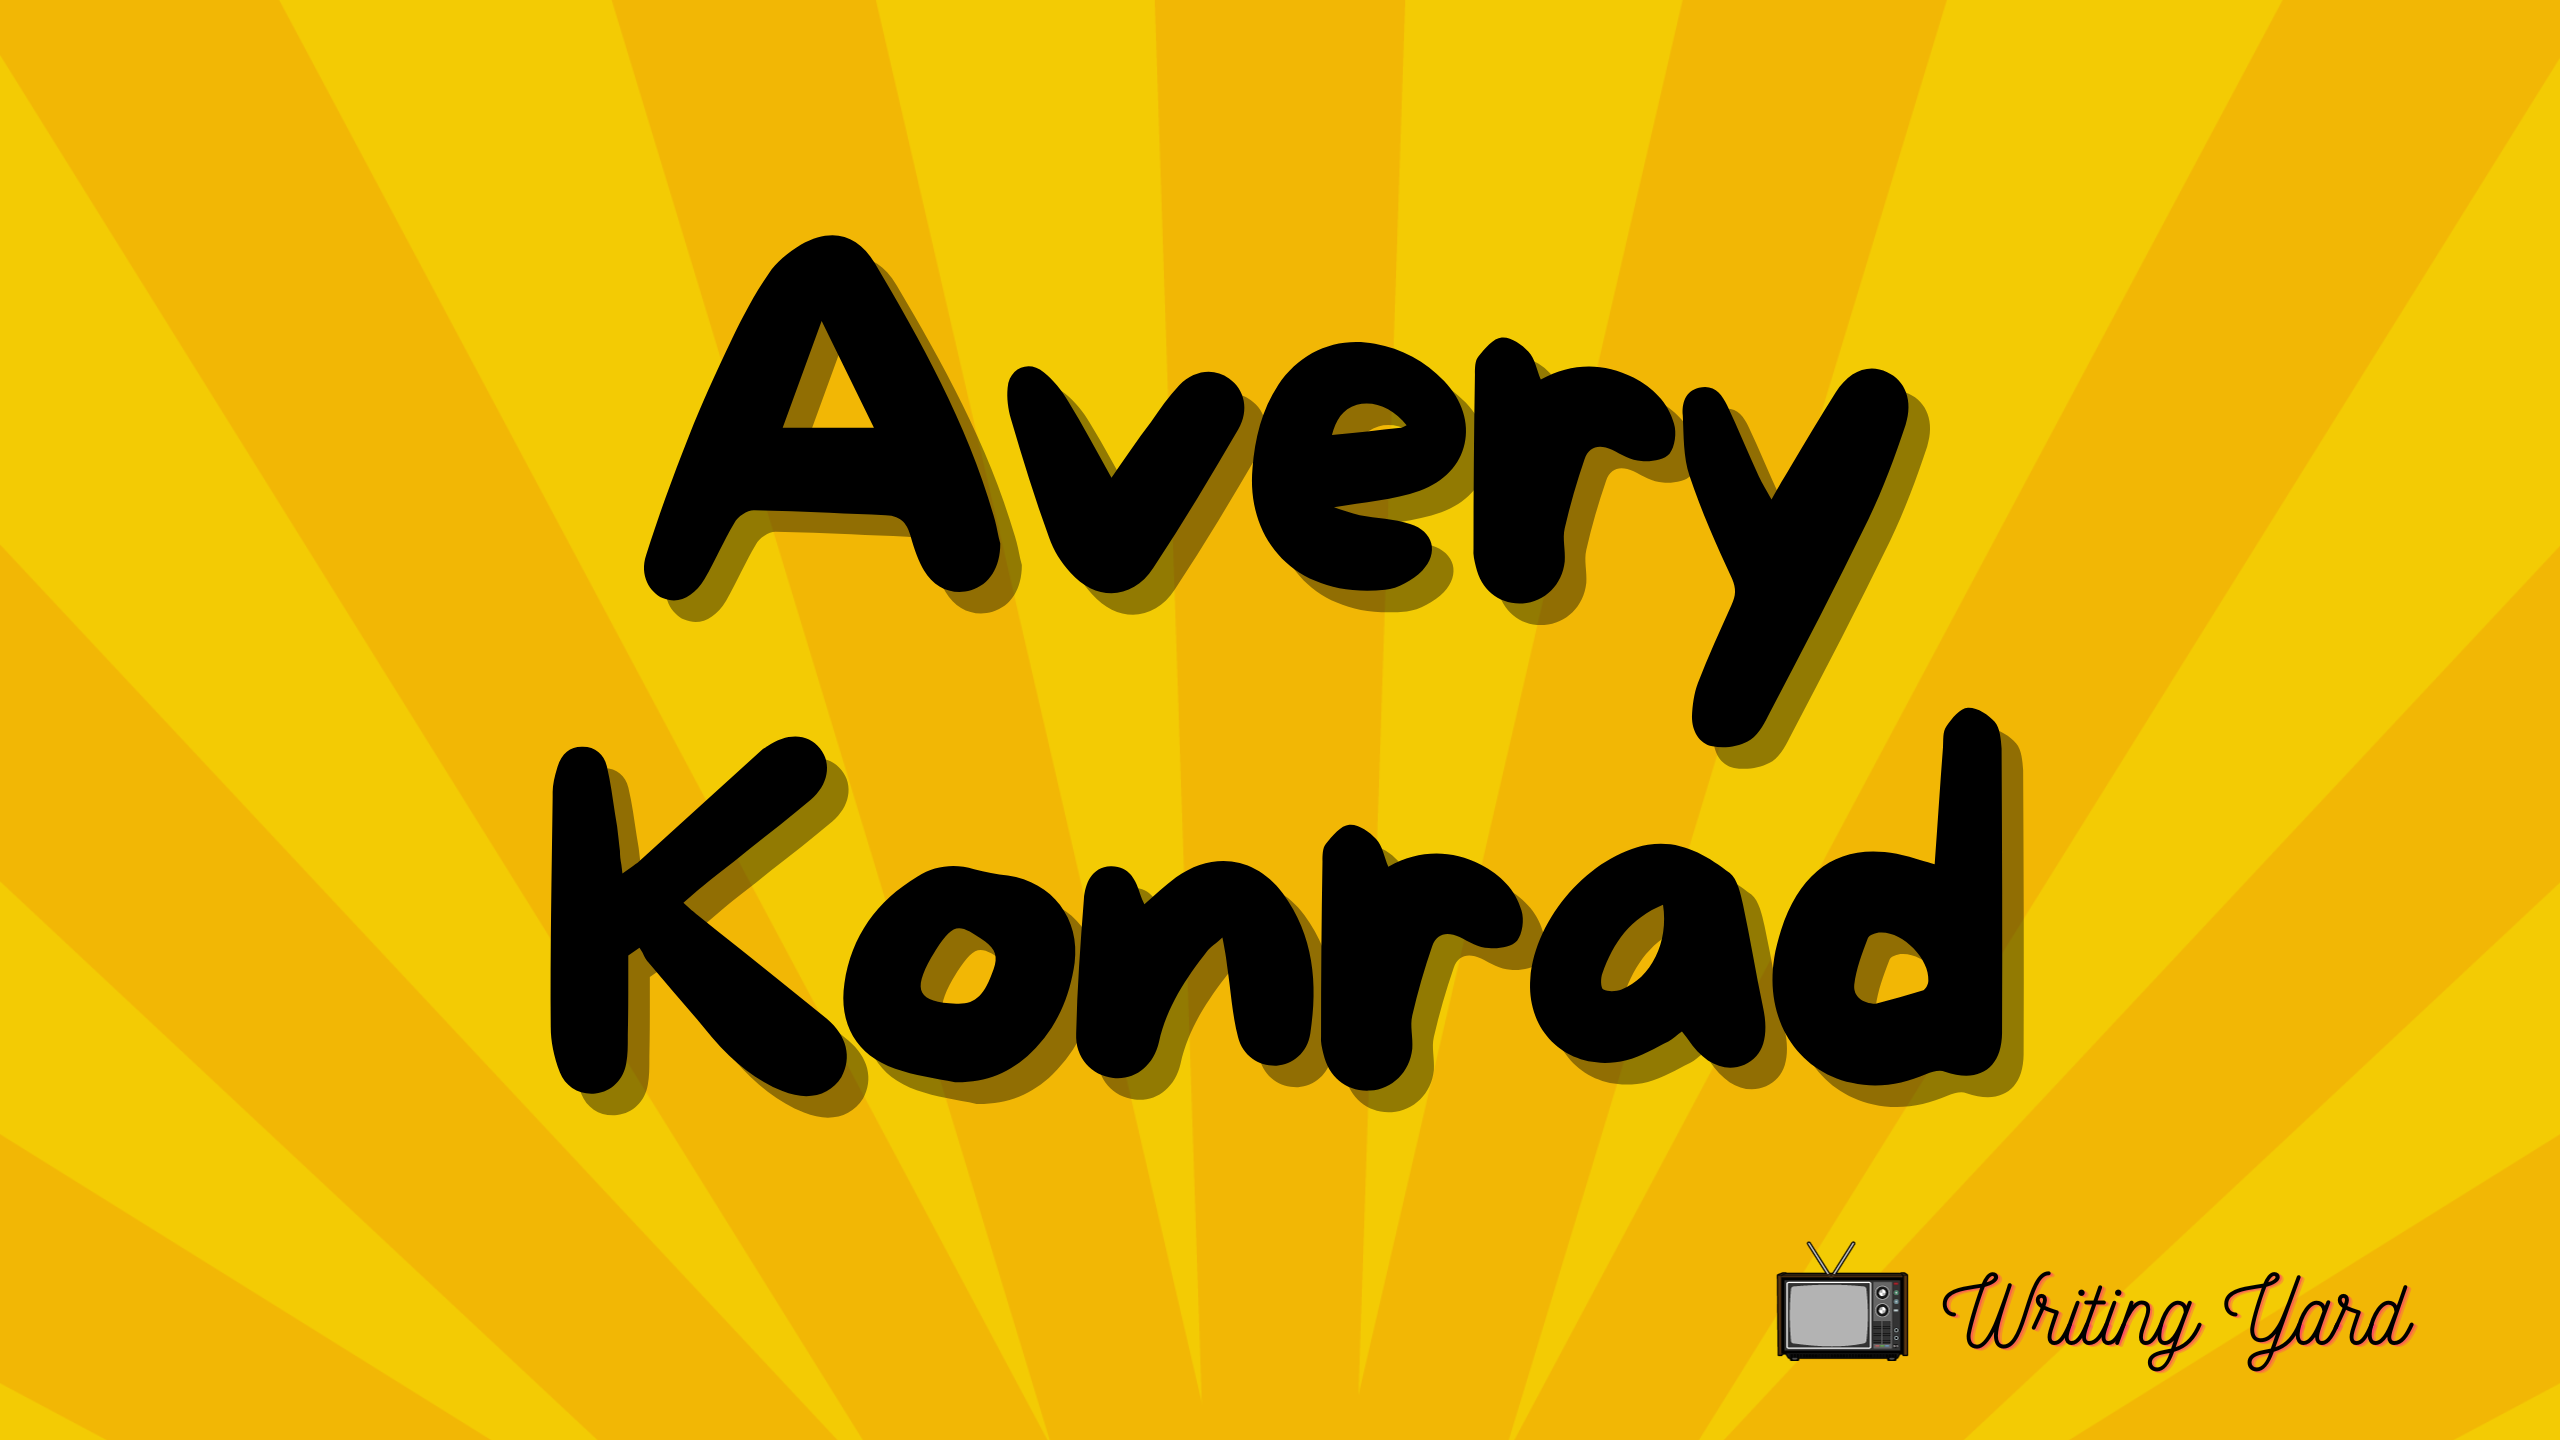 Avery Konrad